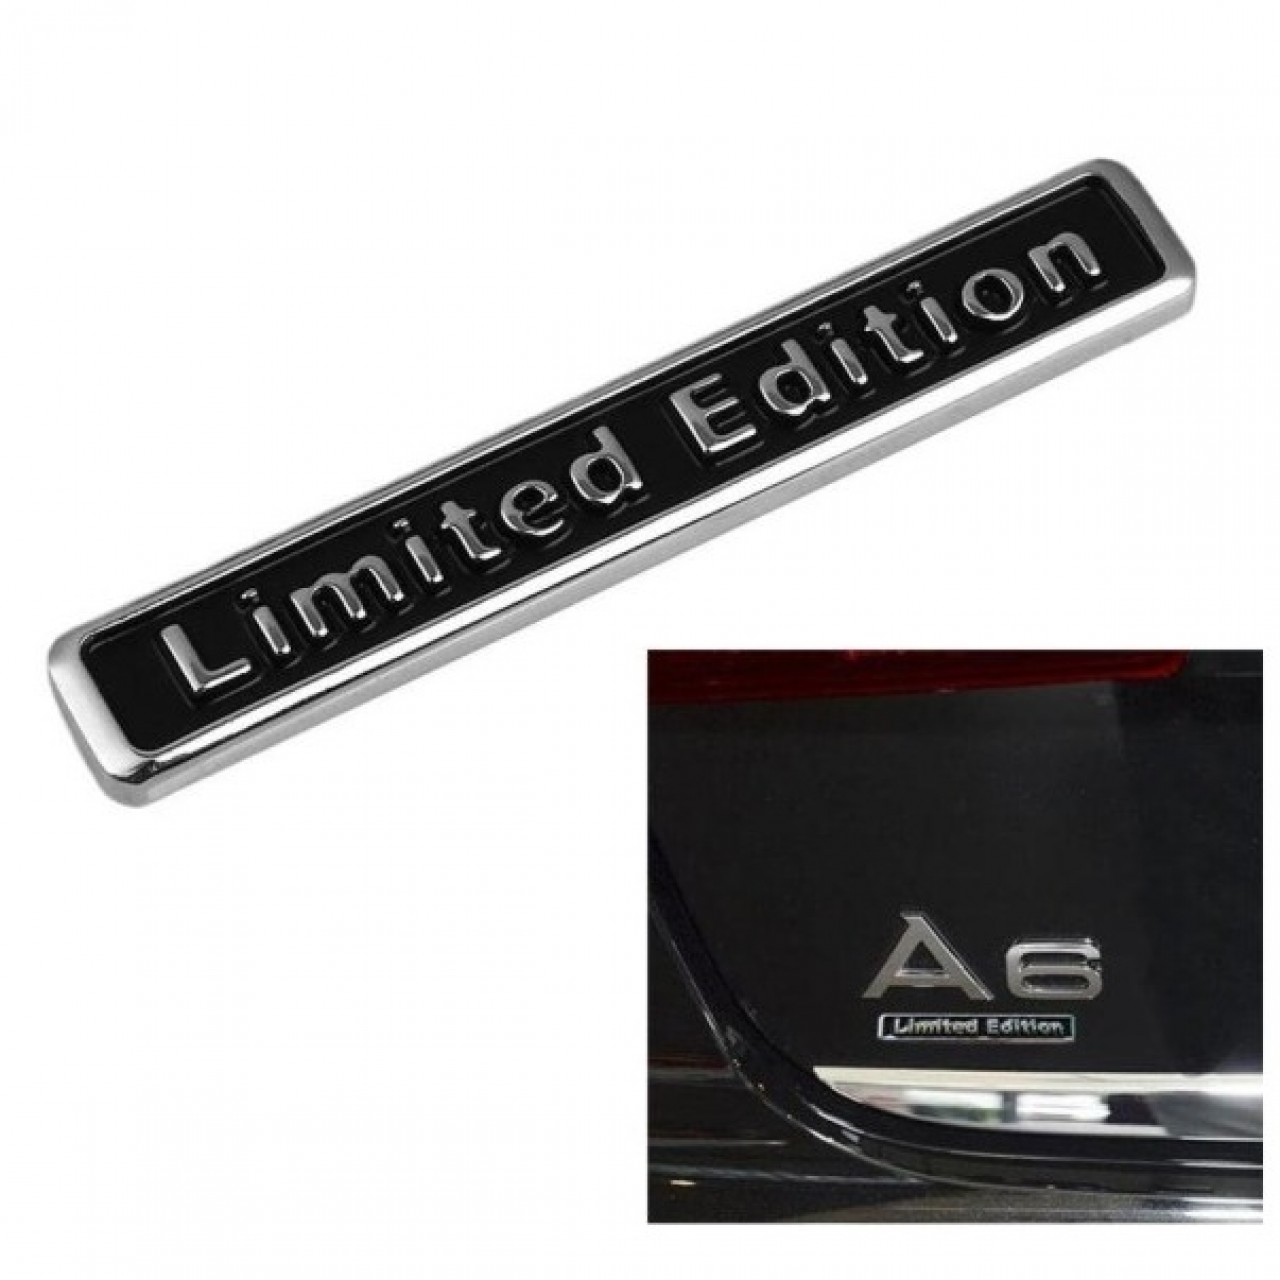 3D Metal Fashion Limited Edition Auto Car Chrome Sticker - Black